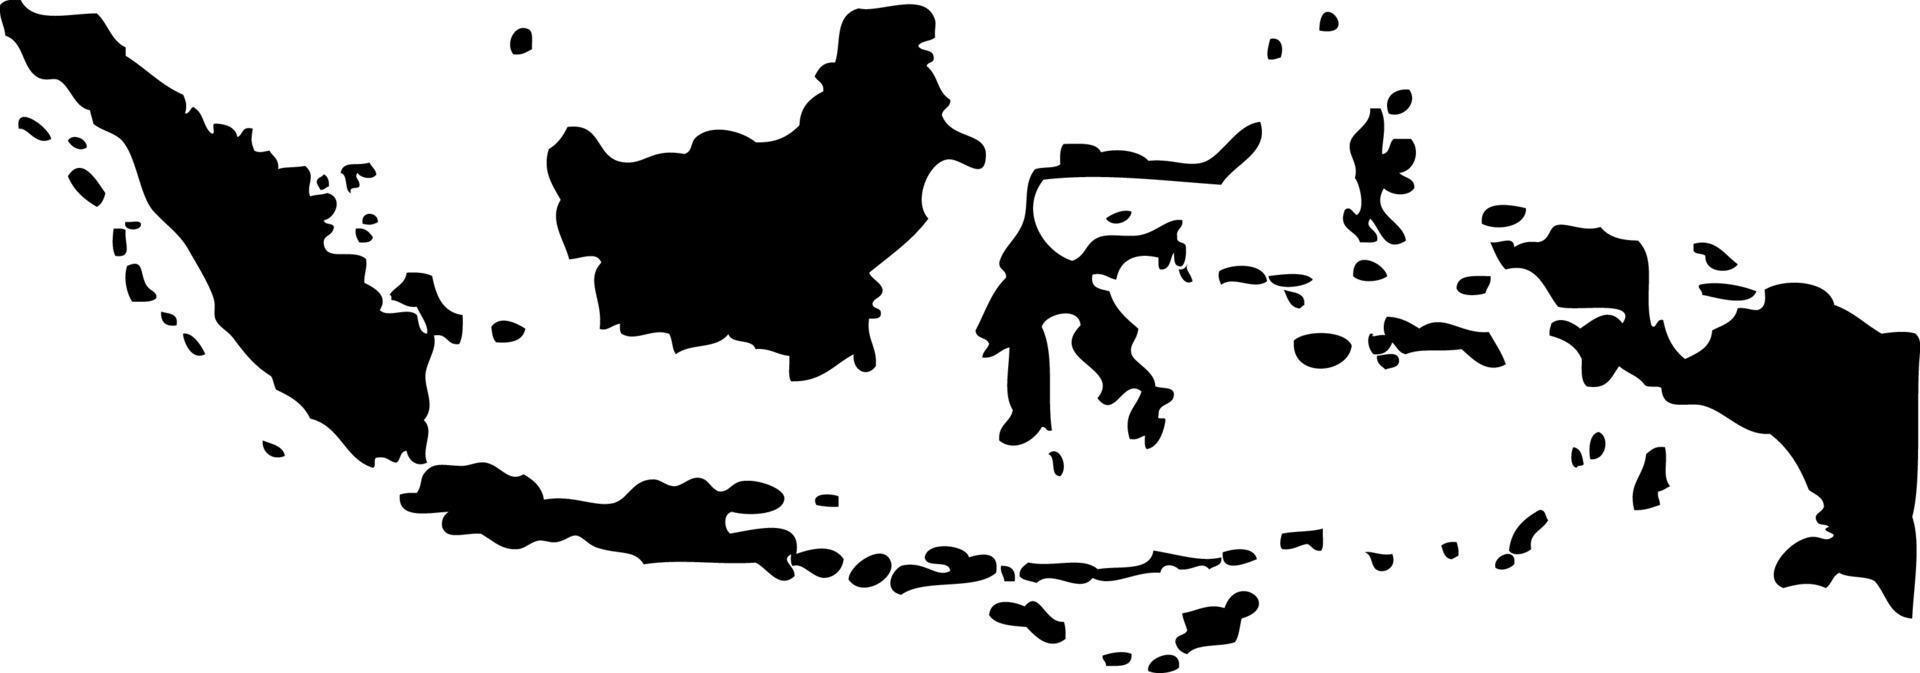 Asia Indonesia vector mapa.mano dibujado minimalismo estilo.